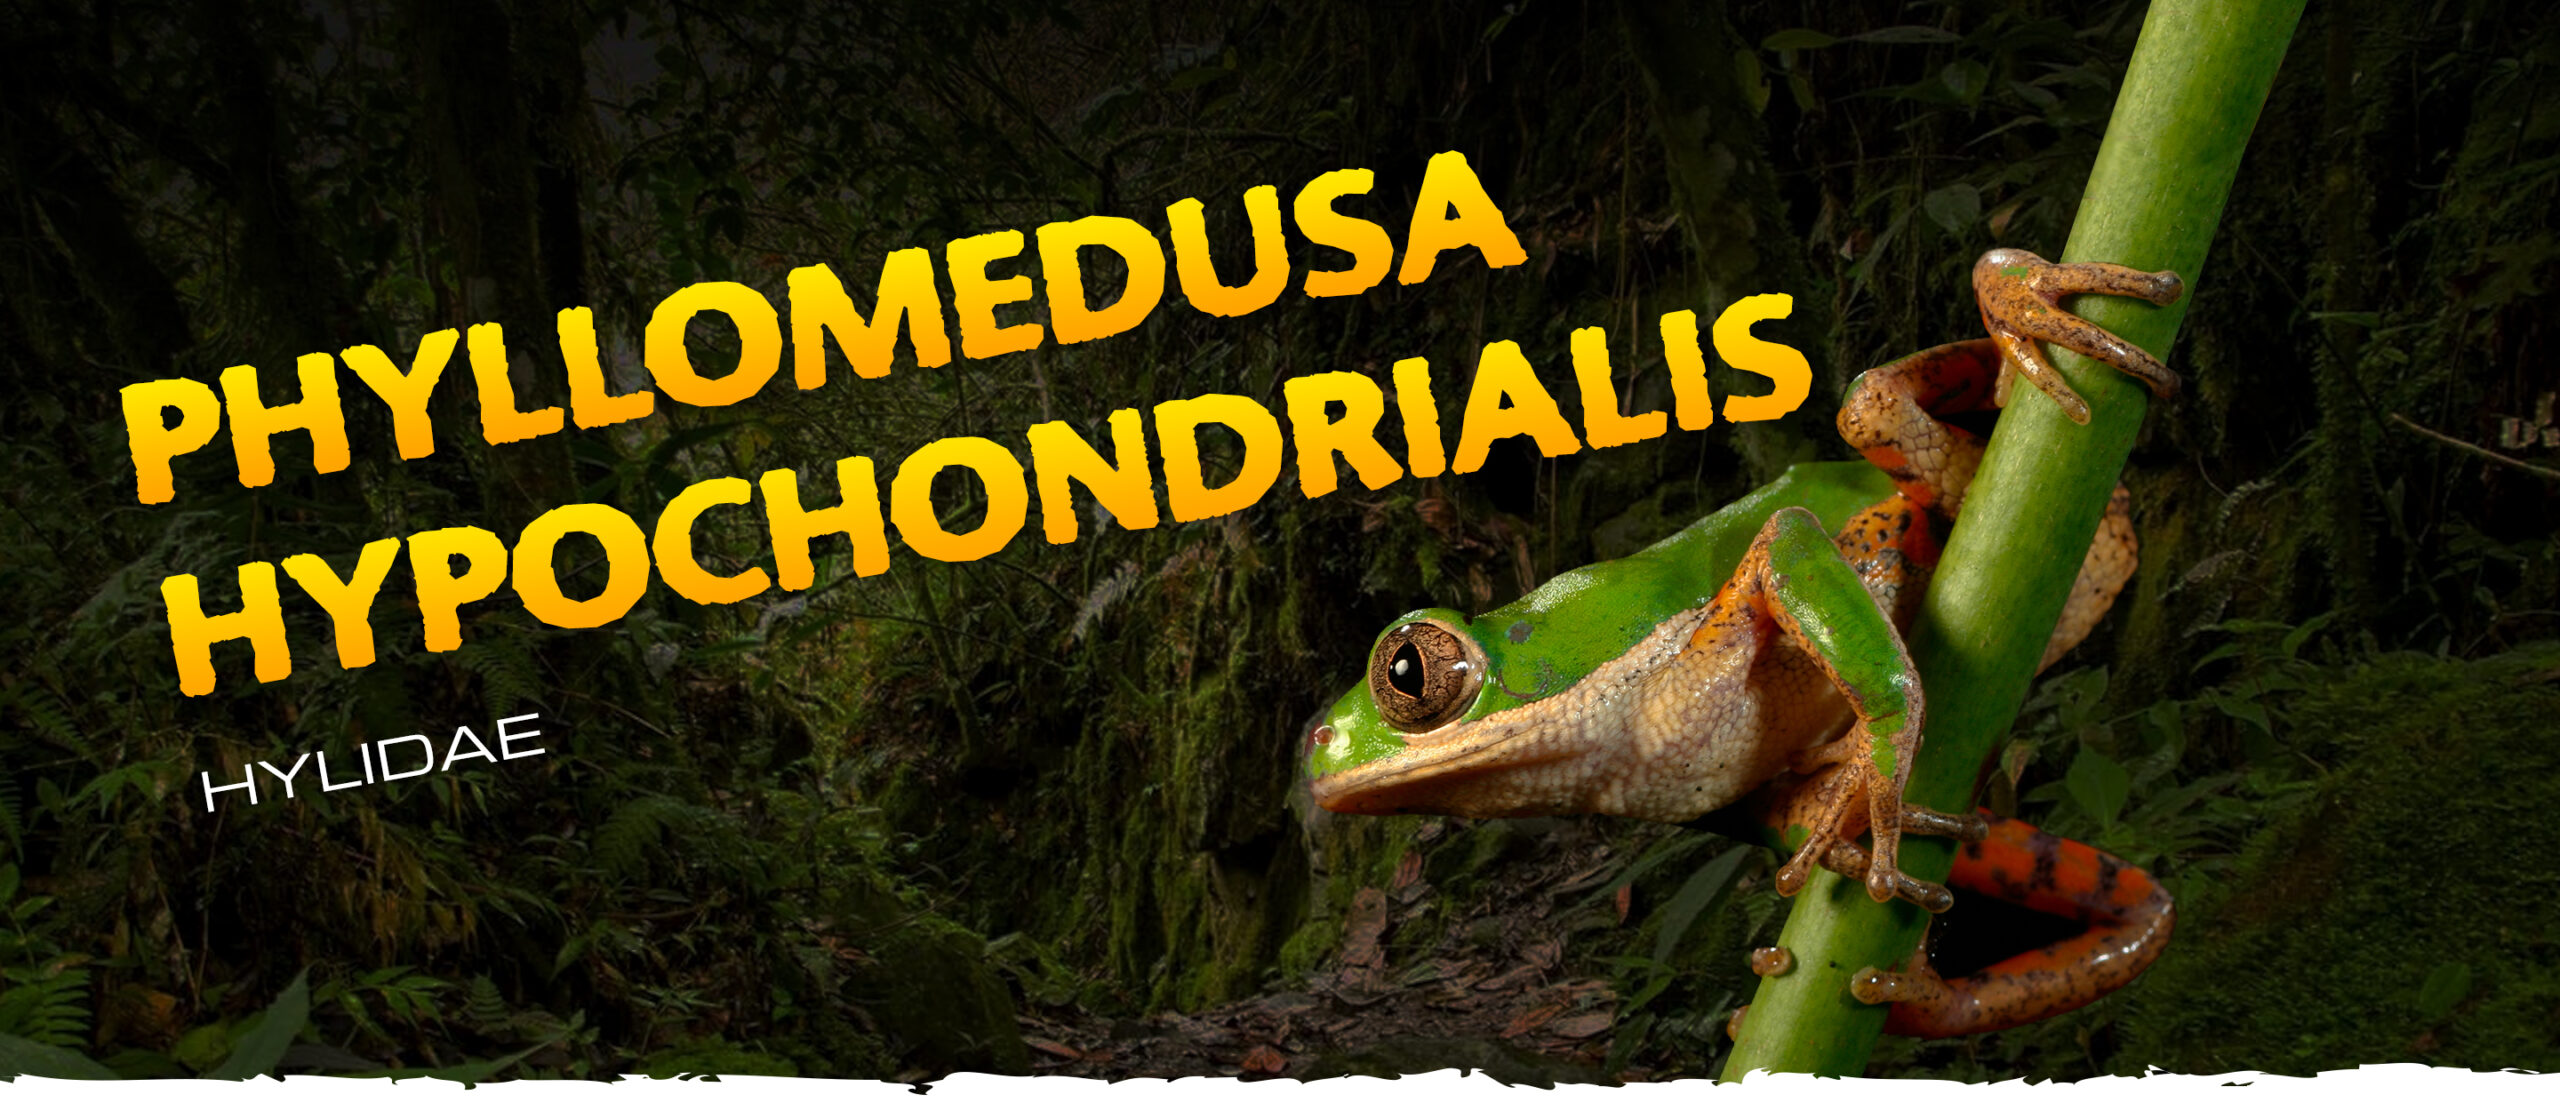 Phyllomedusa hypochondrialis - Frogs & Co